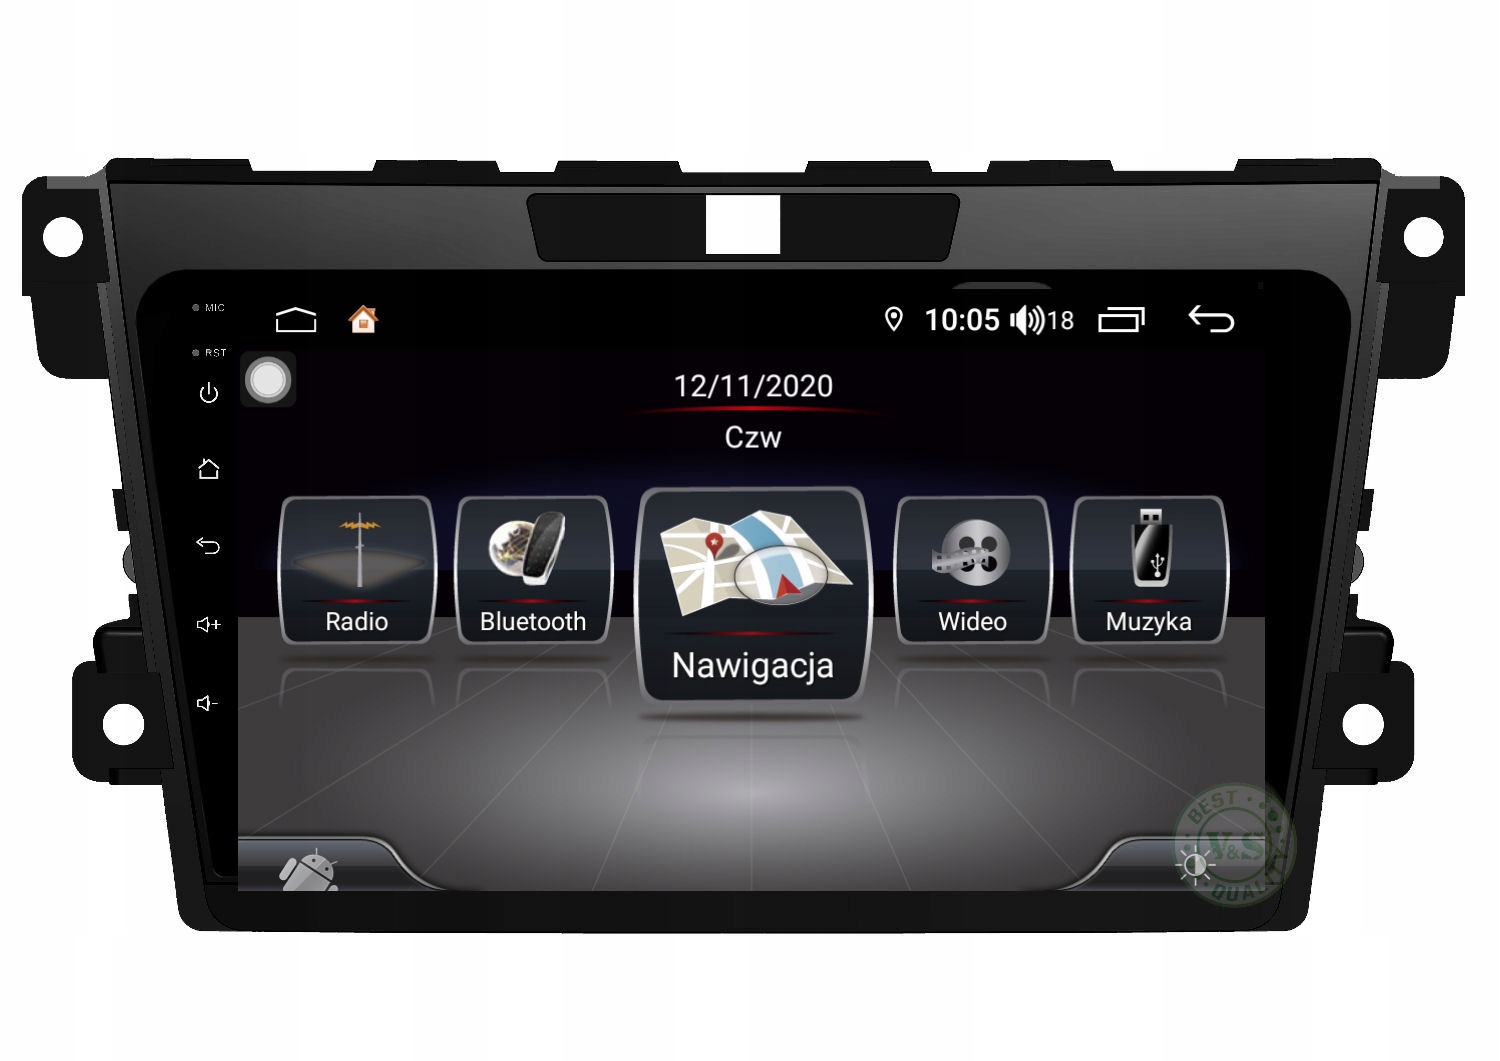 V&S Nawigacja Mazda Cx-7 Android R- Line + Pro - Sklep Internetowy Agd I Rtv - Allegro.pl